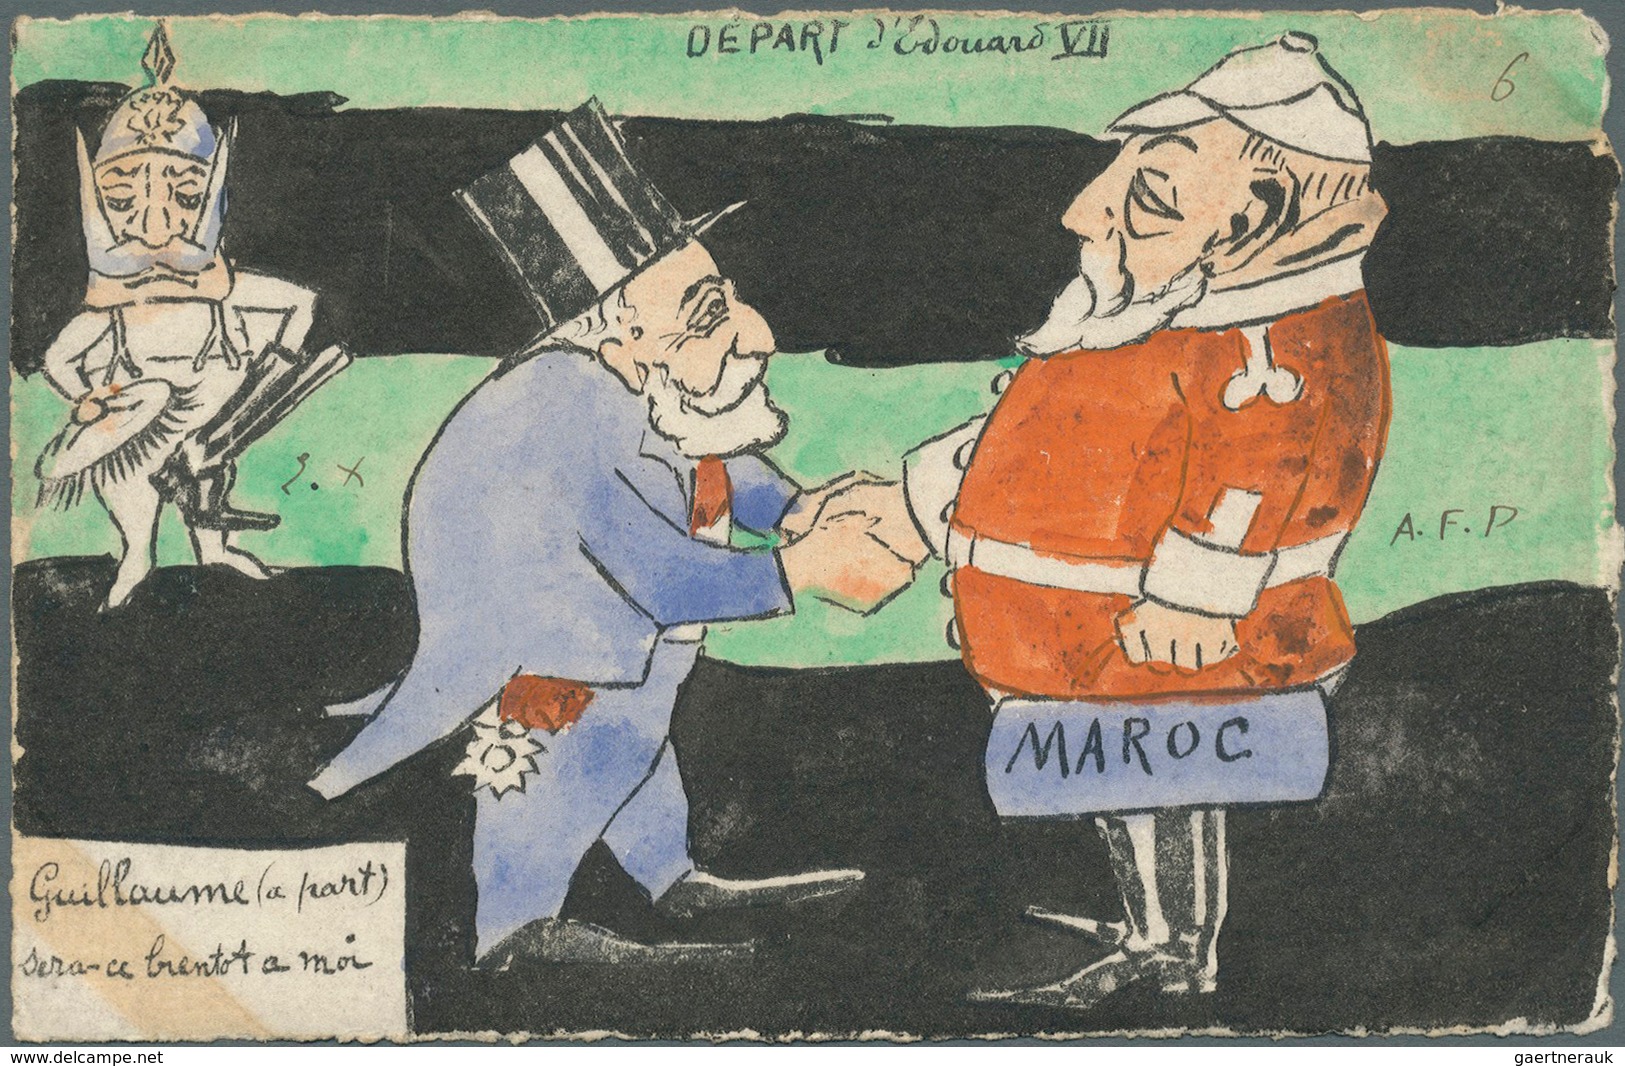 Ansichtskarten: Künstler / Artists: DELAMARRE, A. F. 30 dekorative politische Karikaturen ca. aus de